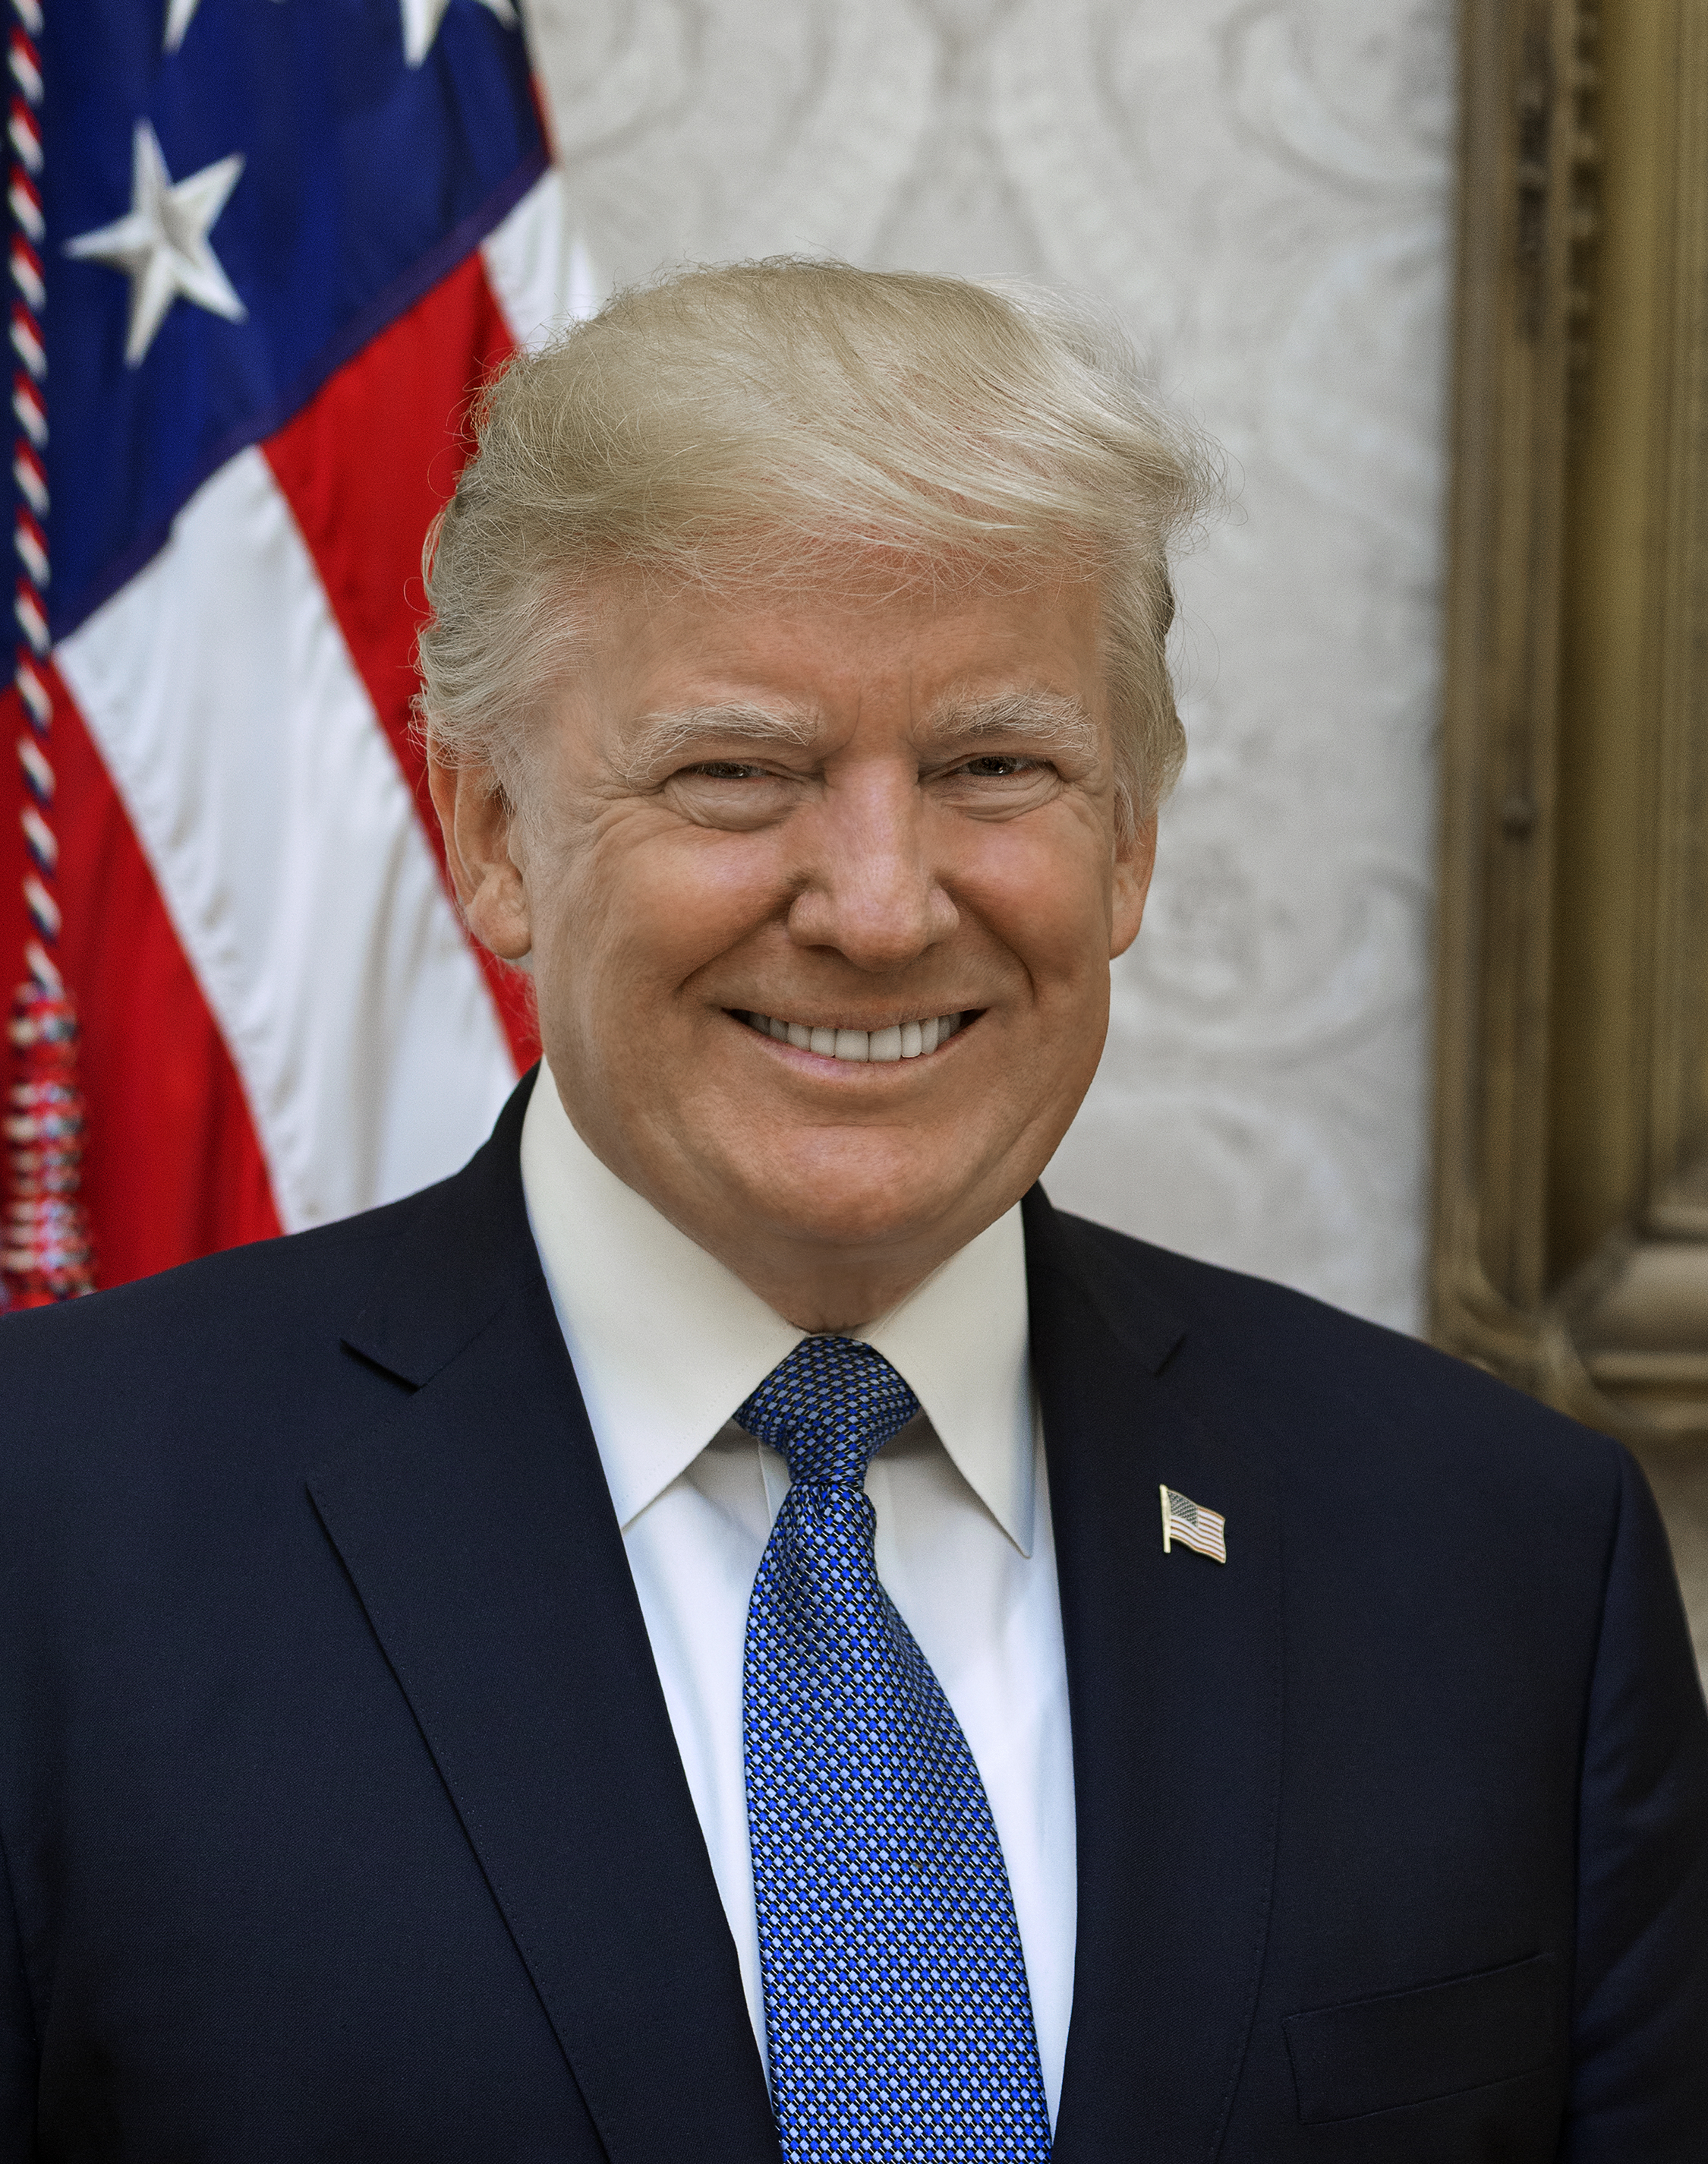 File:Donald Trump official portrait.jpg - Wikimedia Commons